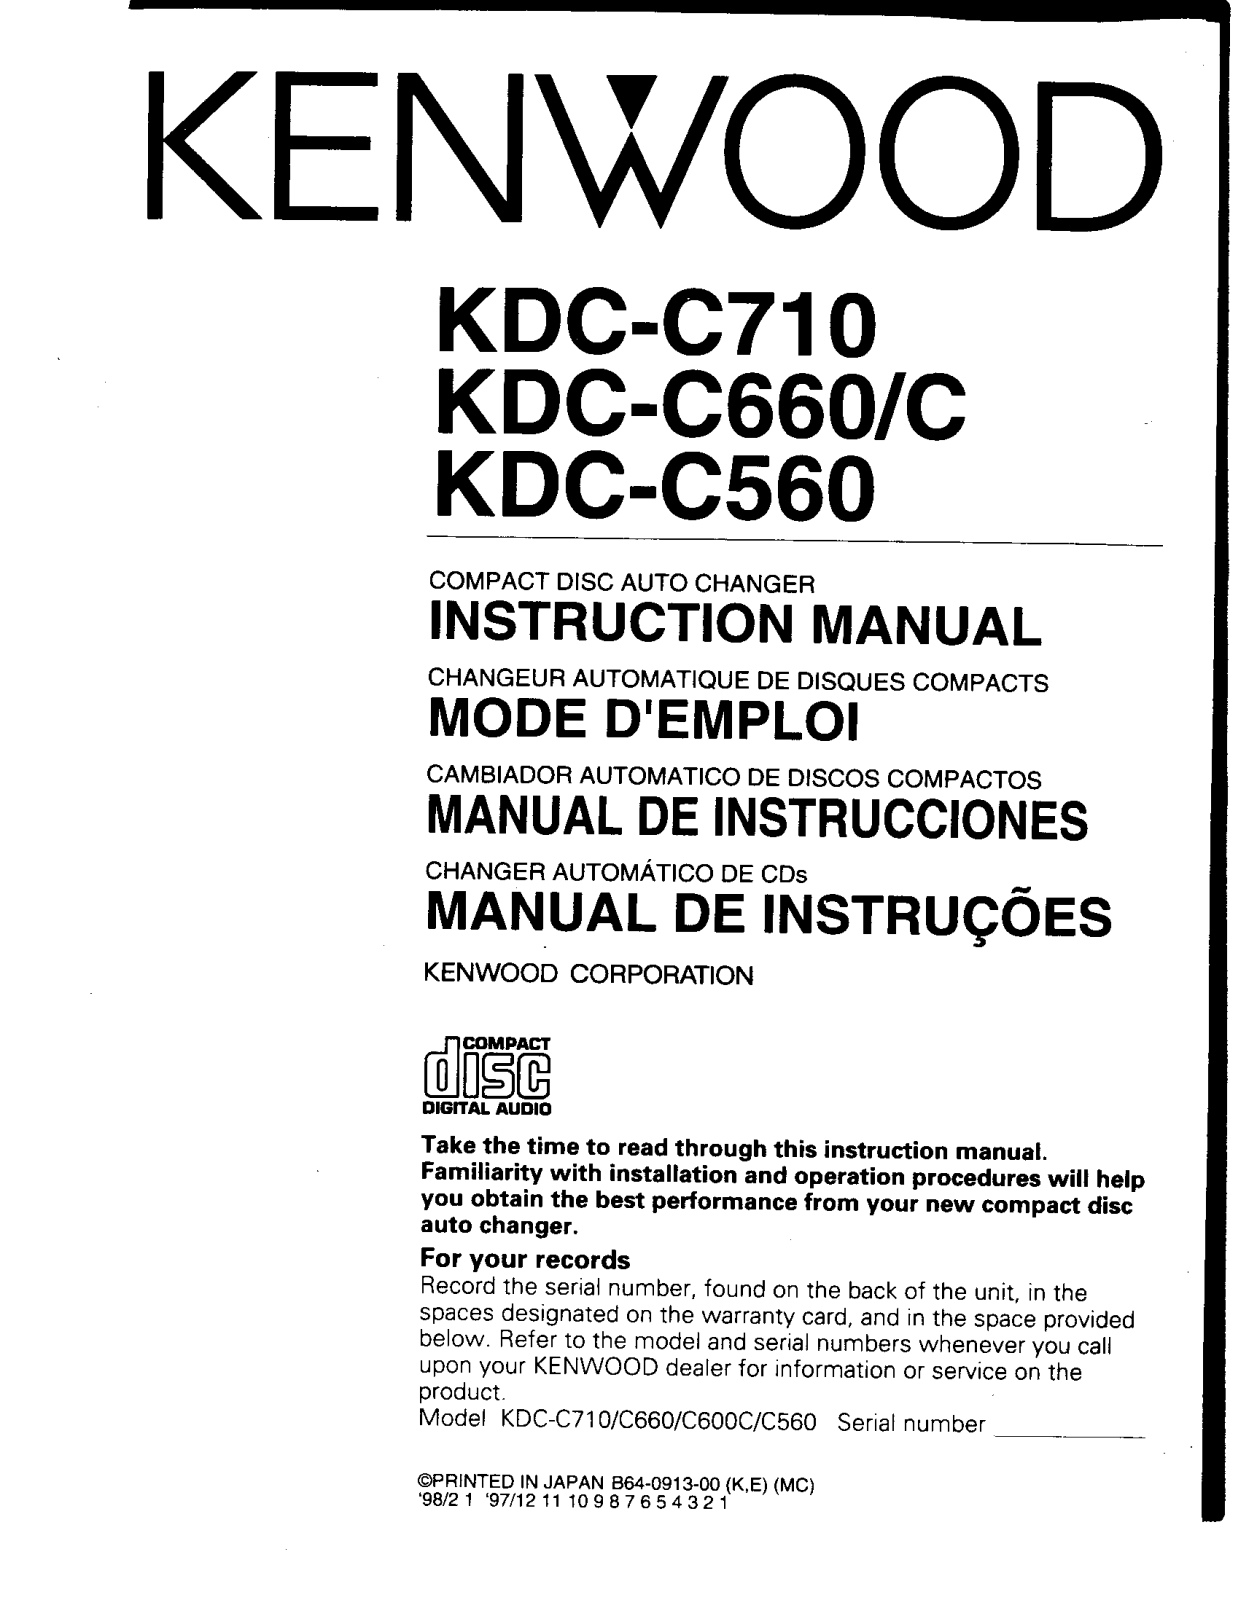 Kenwood KDC-C660, KDC-C560, KDC-C710 Owner's Manual